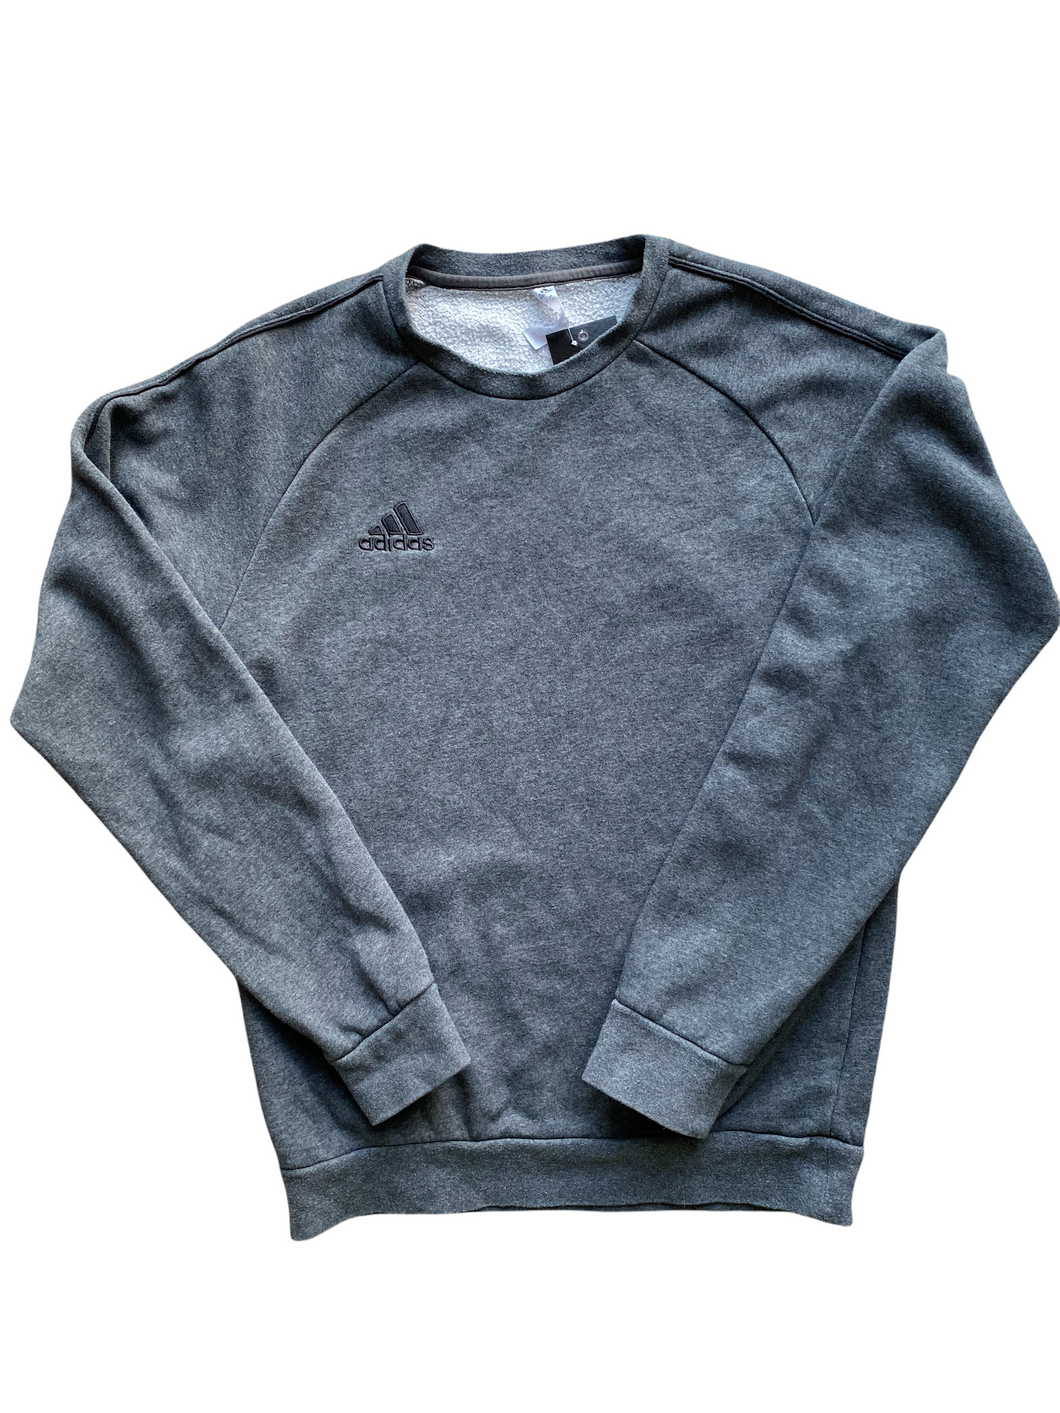 Vintage Adidas Sweater (S)